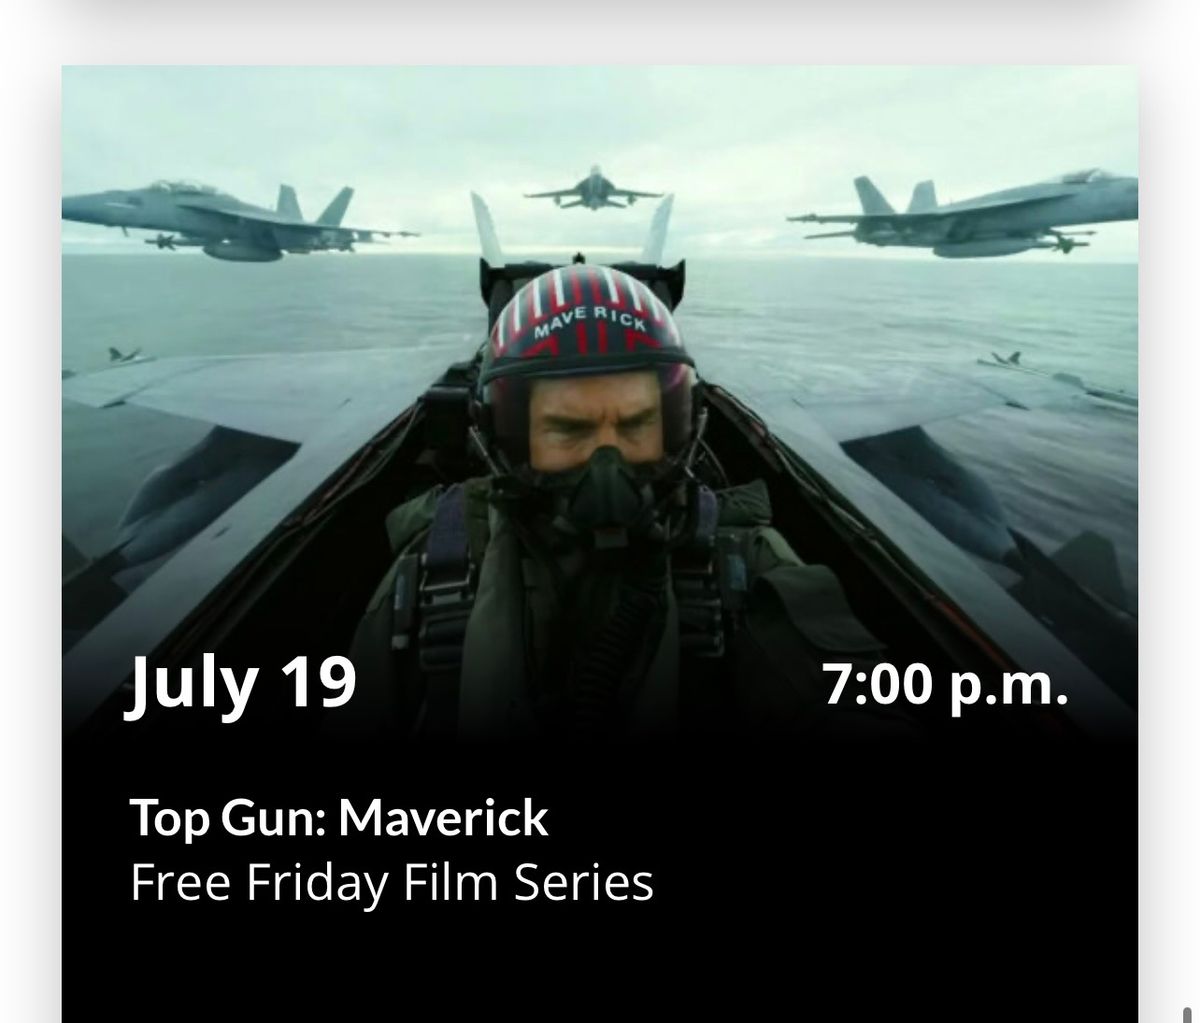 Free Friday Film Series: Top Gun: Maverick 